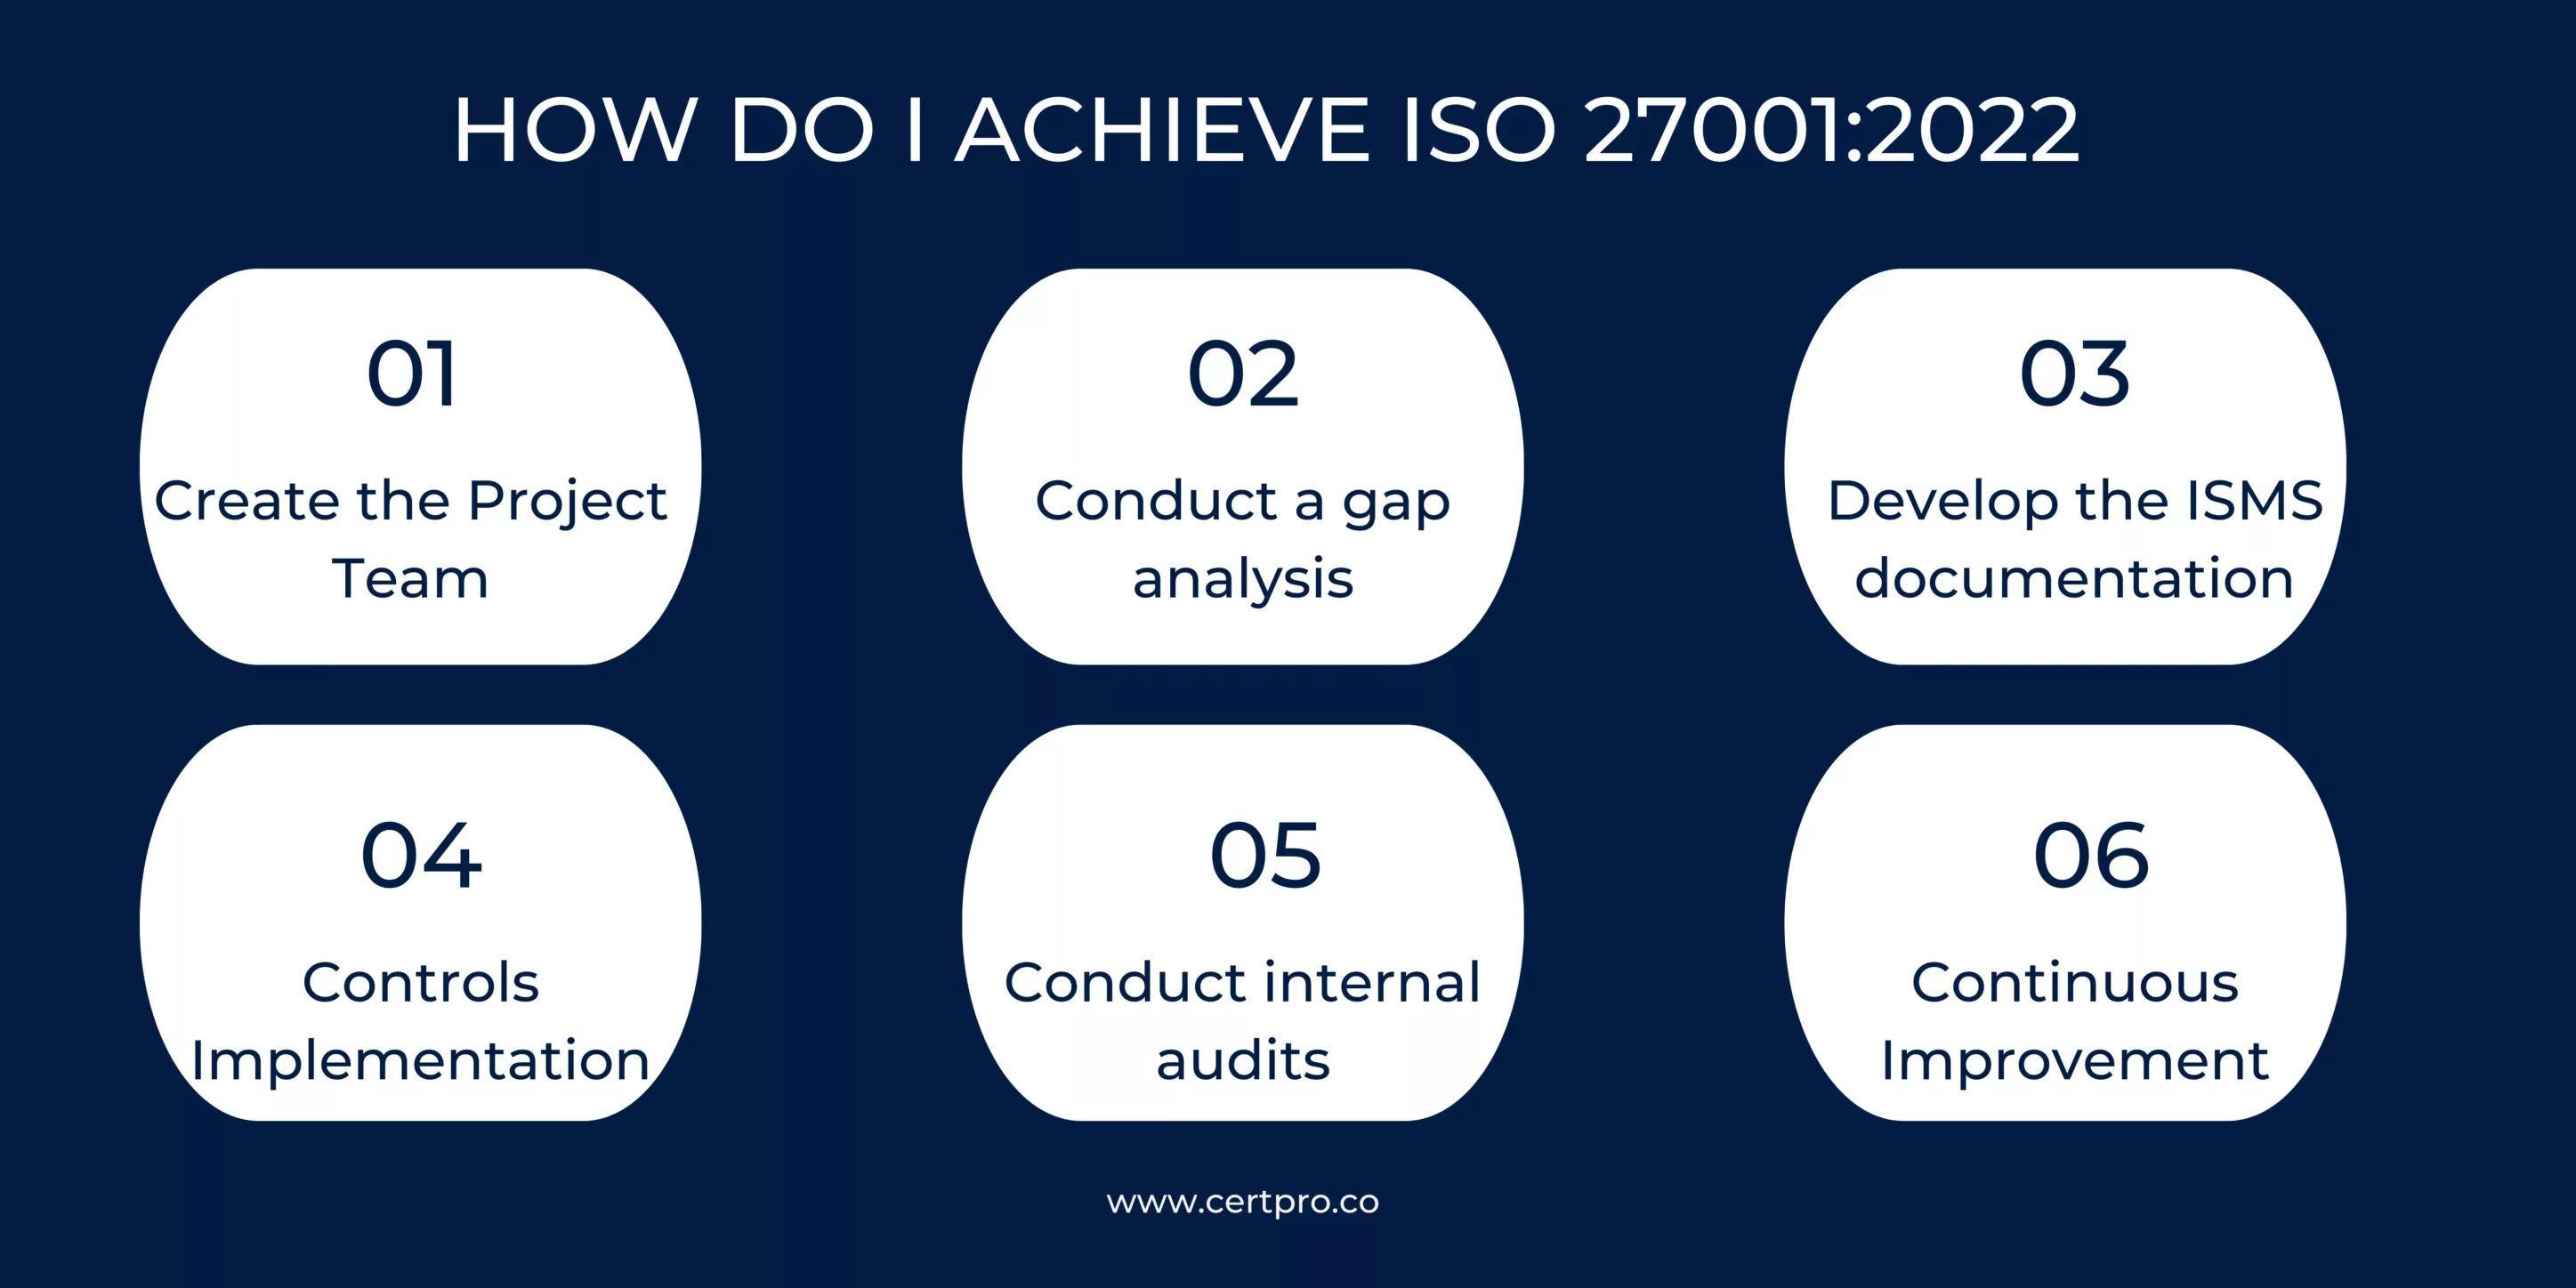 HOW DO I ACHIEVE ISO 270012022